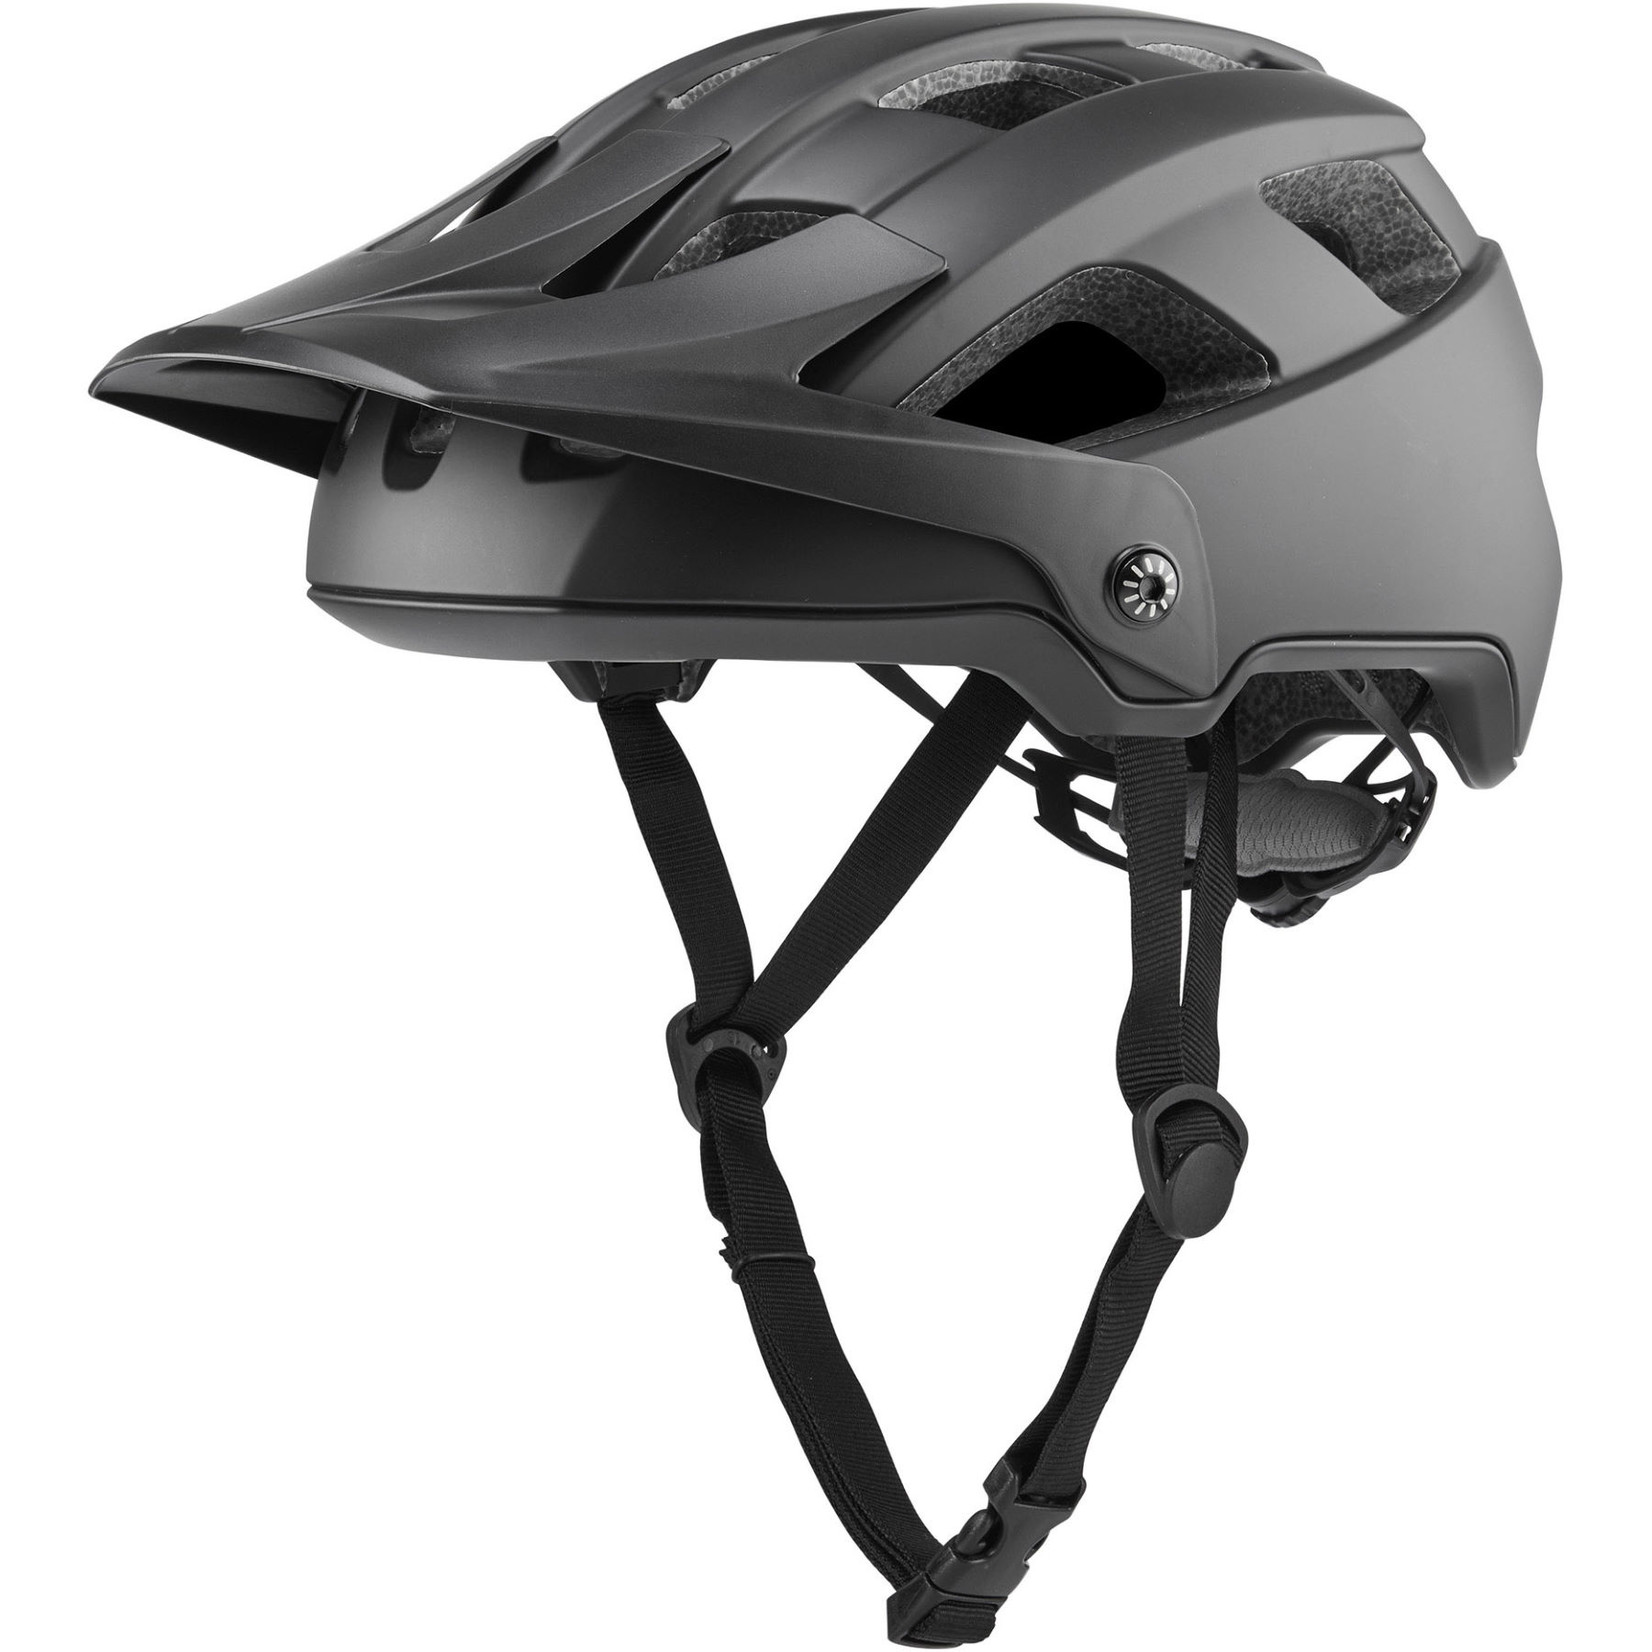 Brand-X EH1 Enduro MTB Helmet